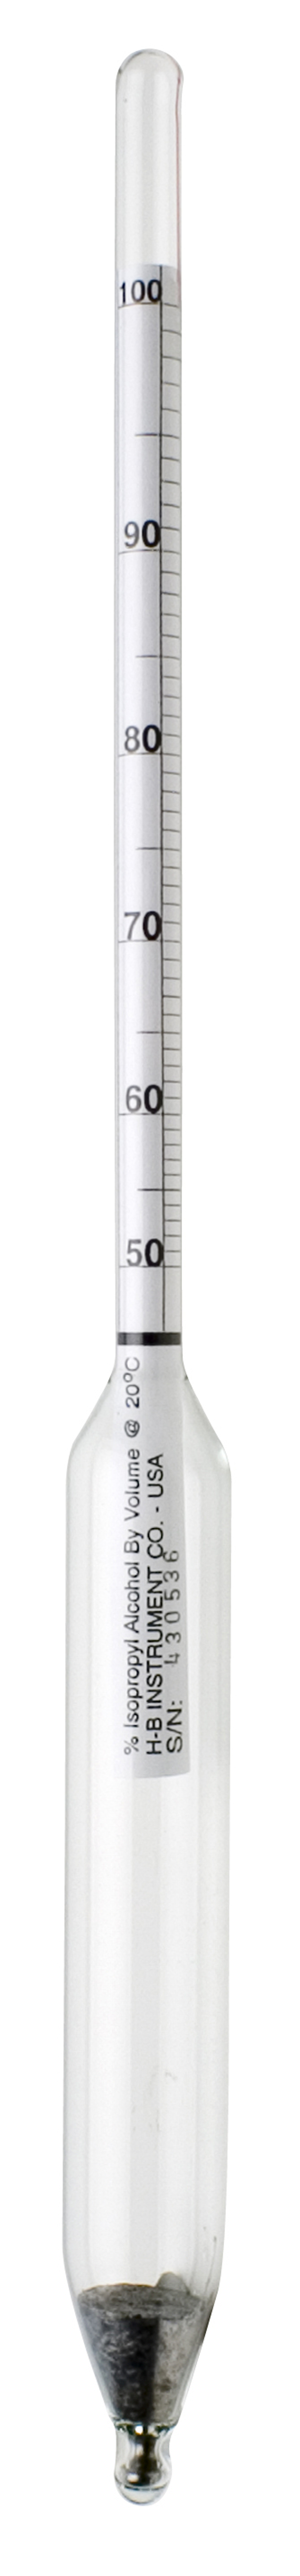 H-B DURAC 49/60 Percent Alcohol Proof Precision Hydrometer B61807-5600 Bel-Art 